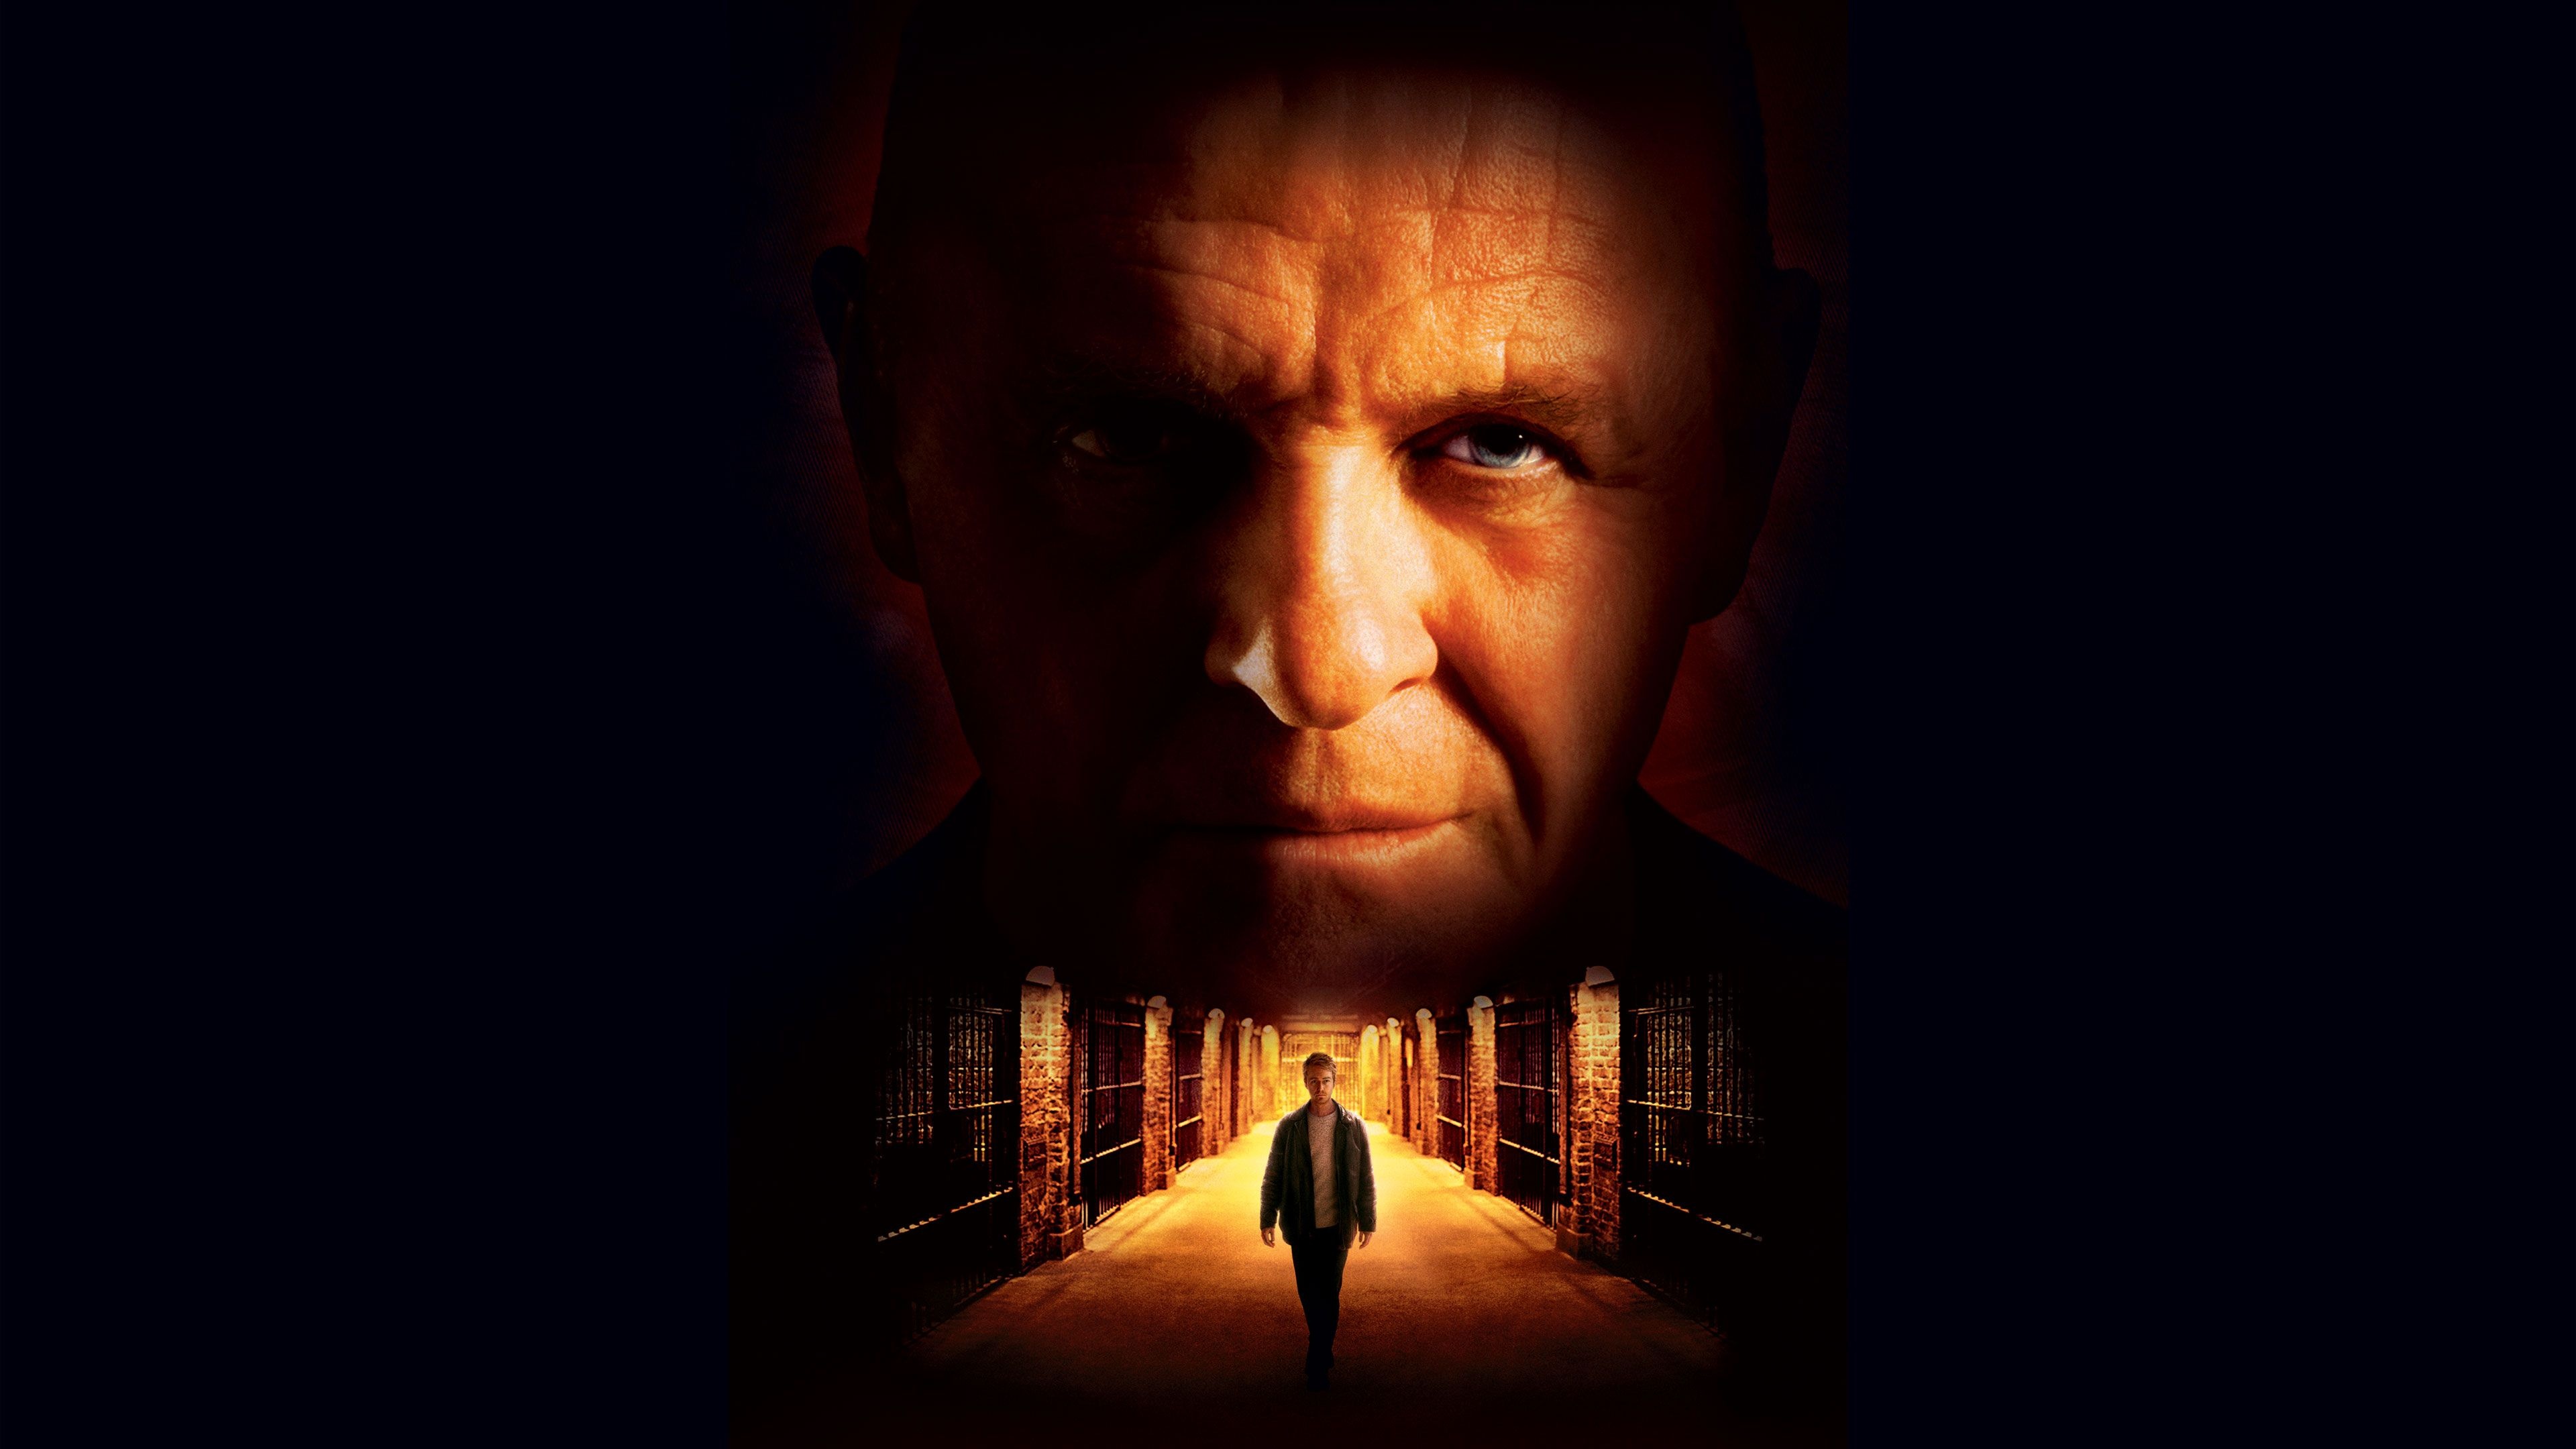 Red Dragon movie scenes, Thriller masterpiece, Psychological suspense, Hannibal Lecter, 3840x2160 4K Desktop